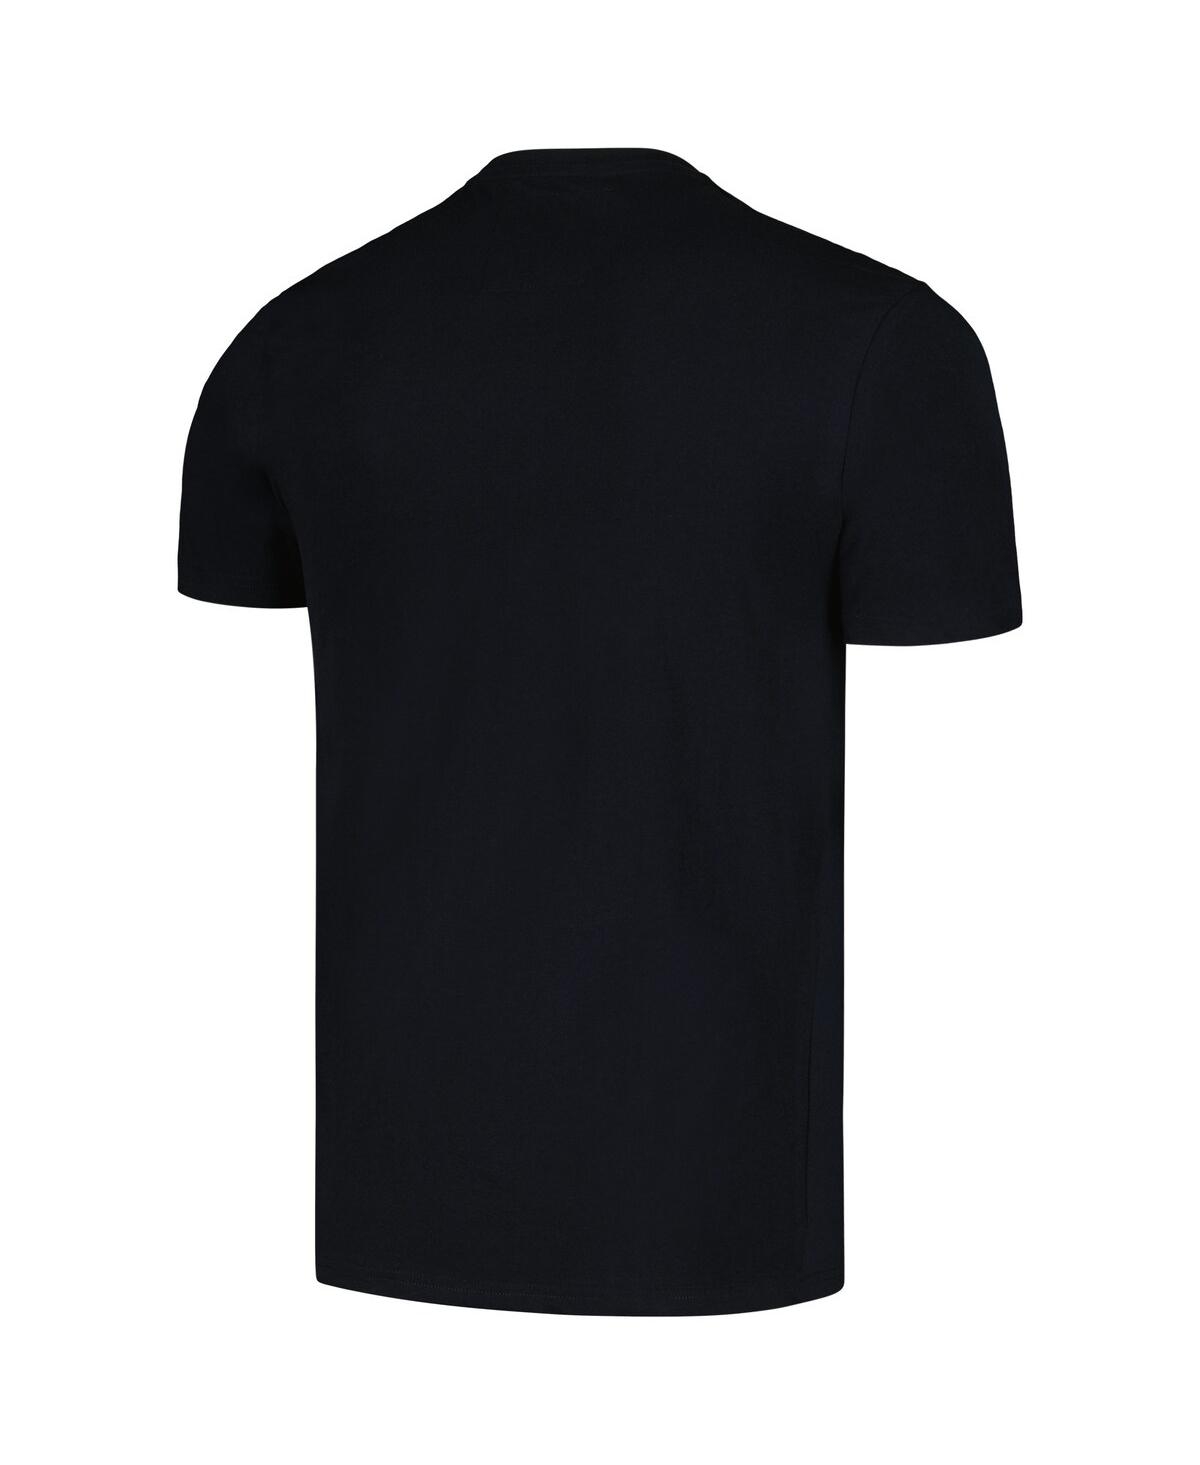 Shop Reason Men's And Women's Black Def Leppard Skull T-shirt